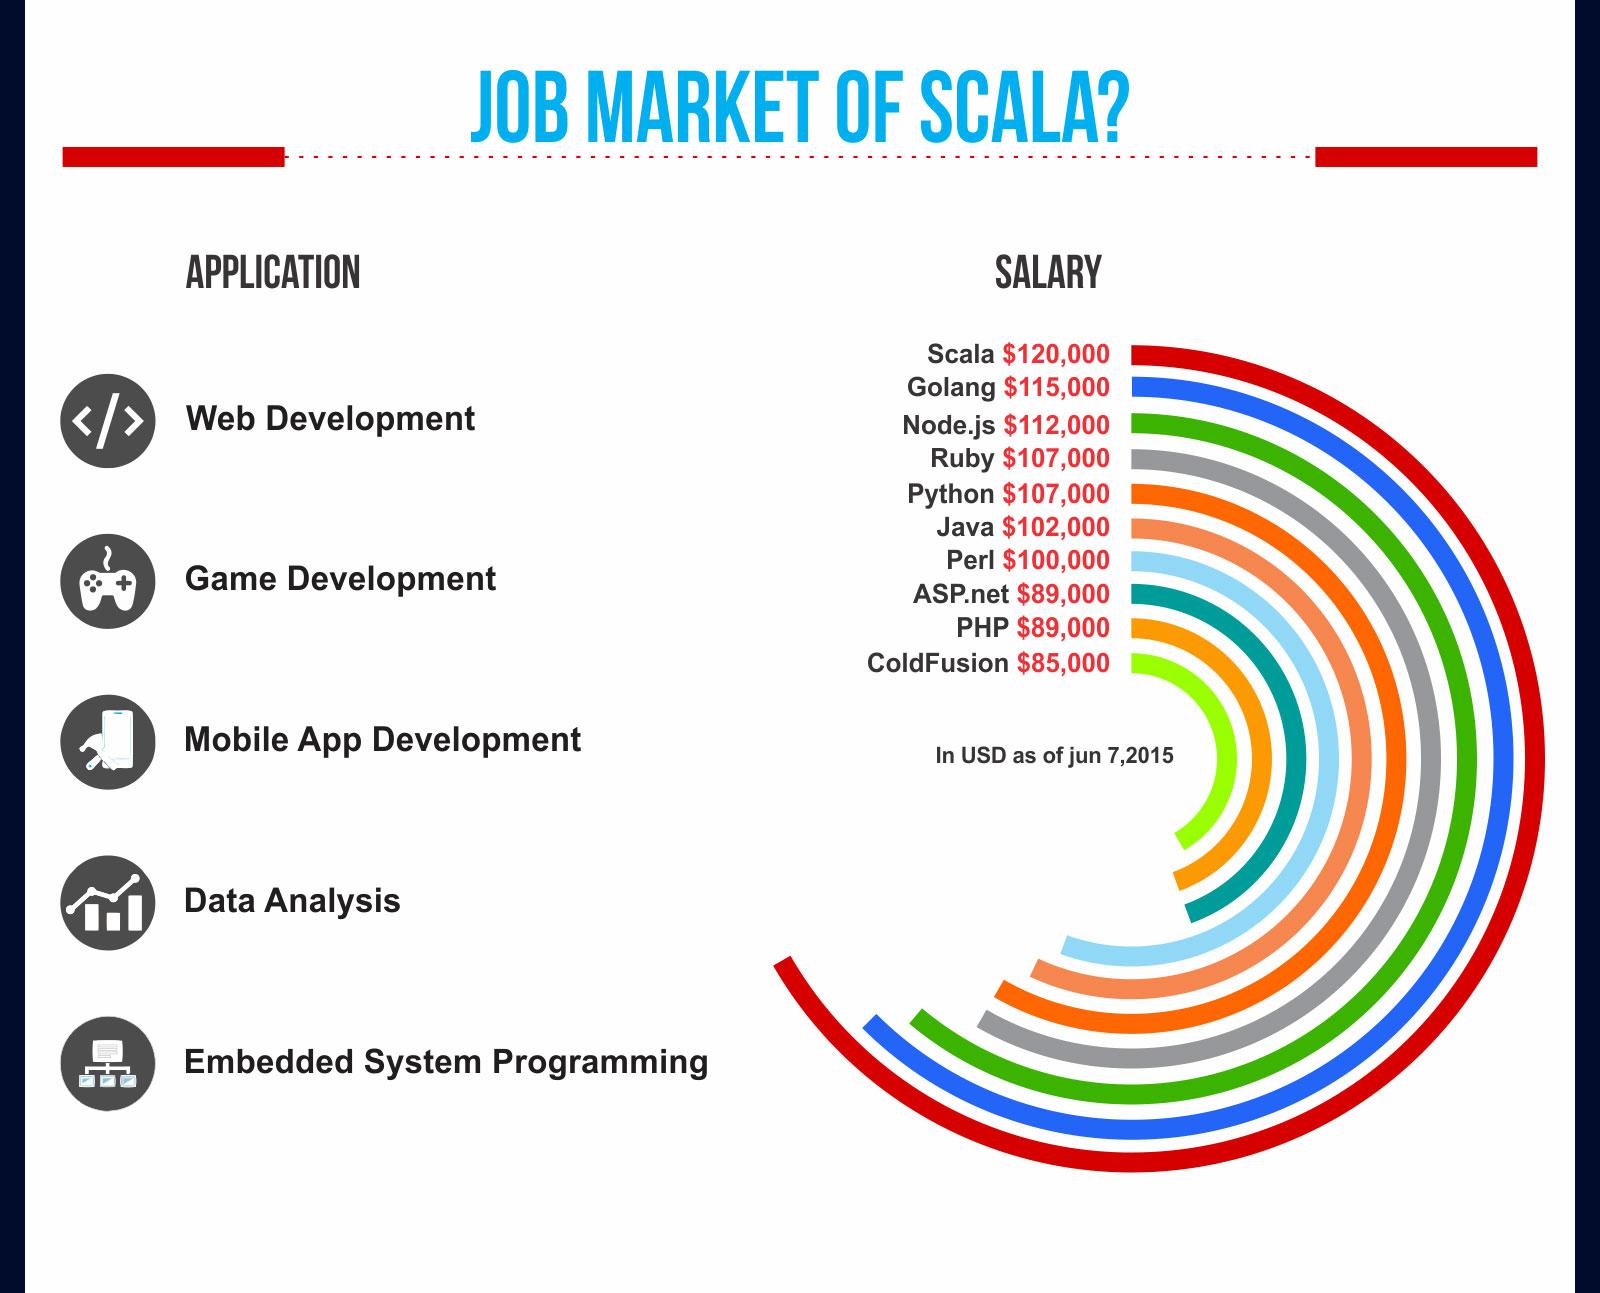 Job Market of Scala